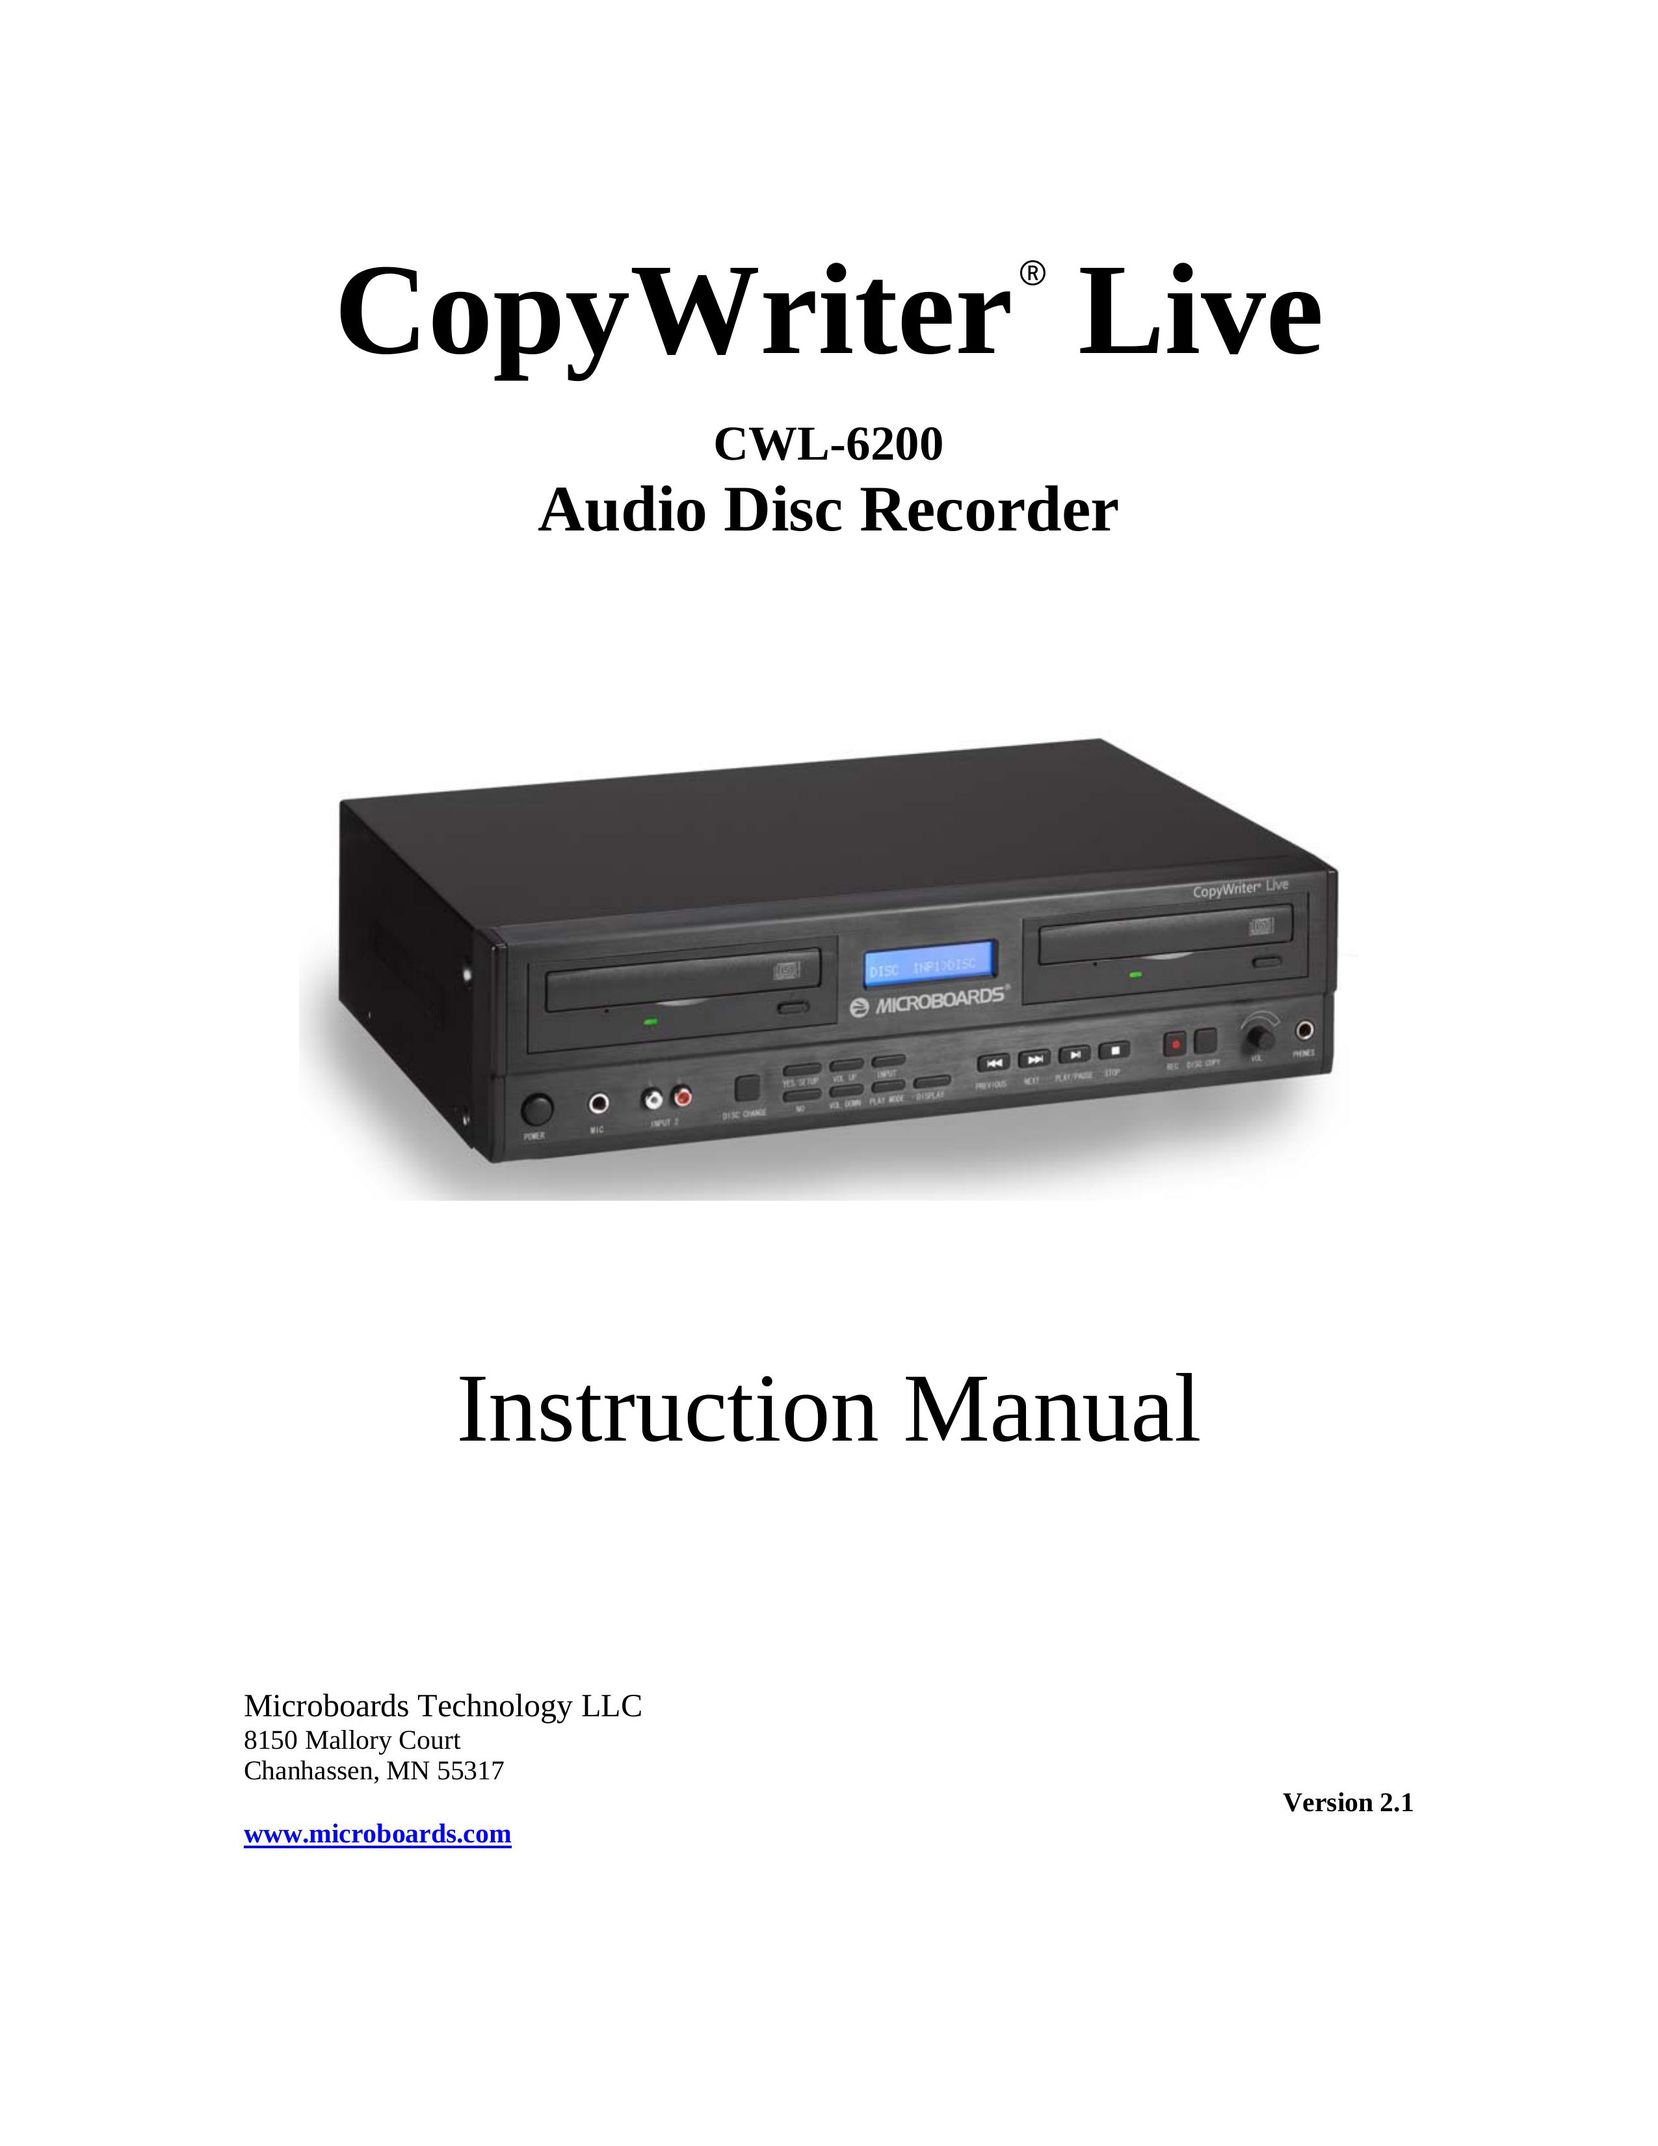 MicroBoards Technology CWL-6200 Microcassette Recorder User Manual